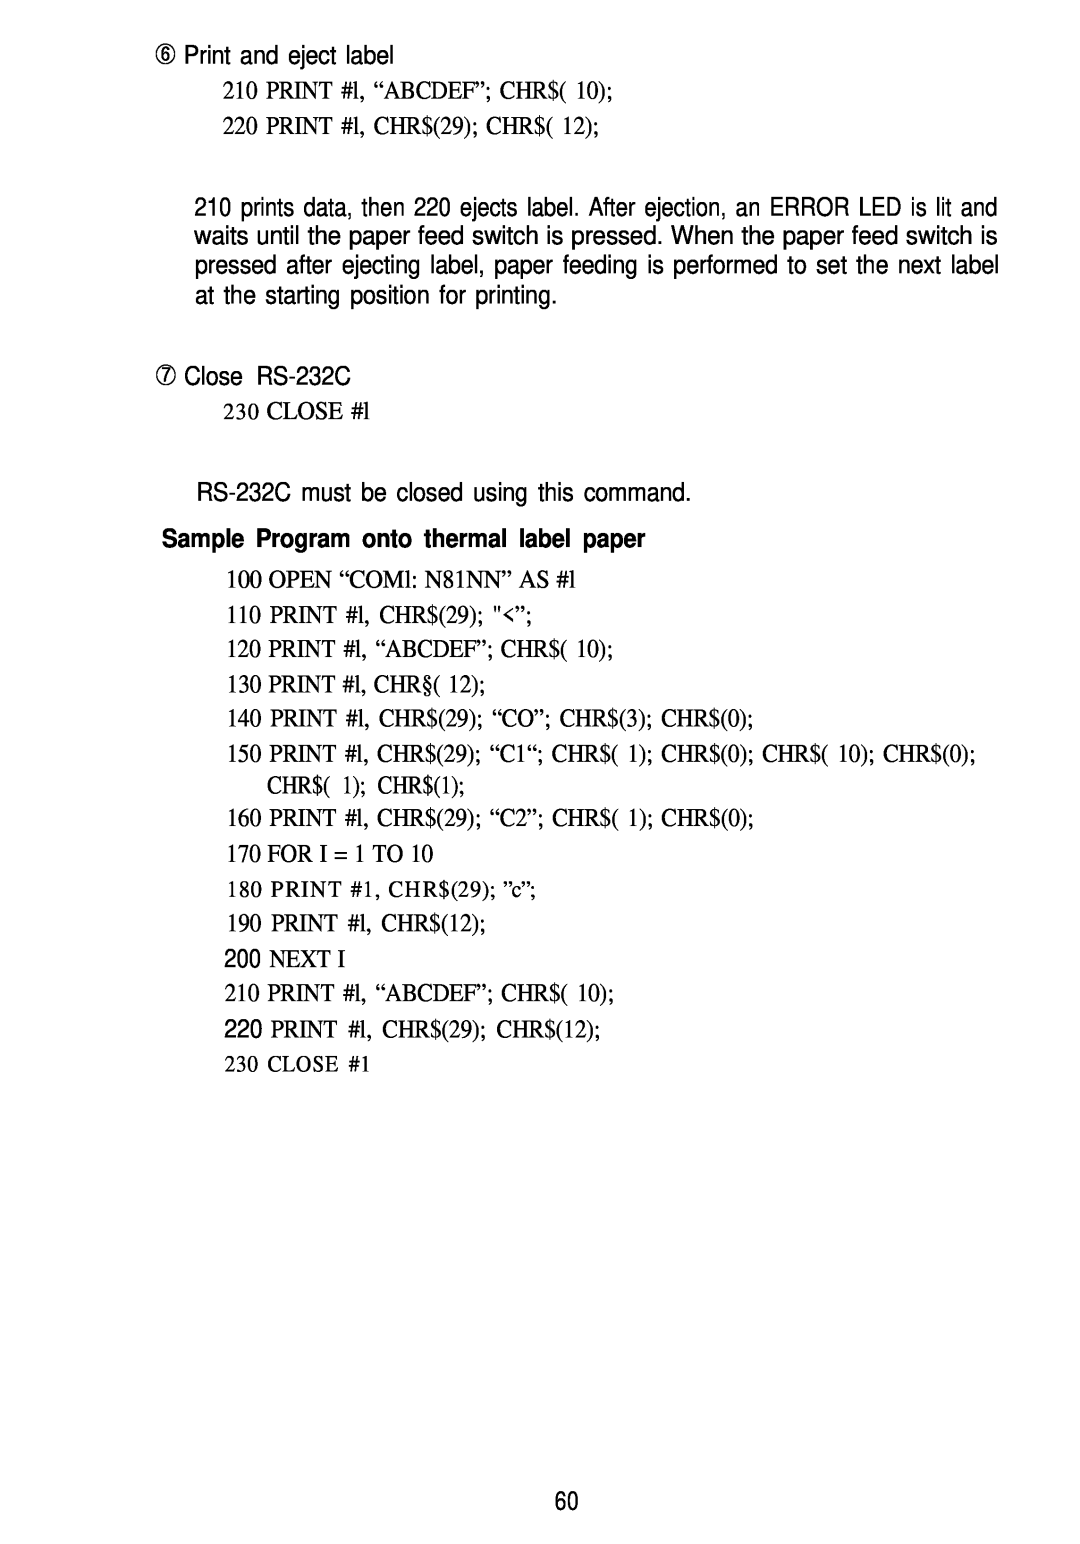 Seiko Group TM-L60 manual n Sample Program onto thermal label paper, PRINT #1, CHR$29 ”c”, CLOSE #1 